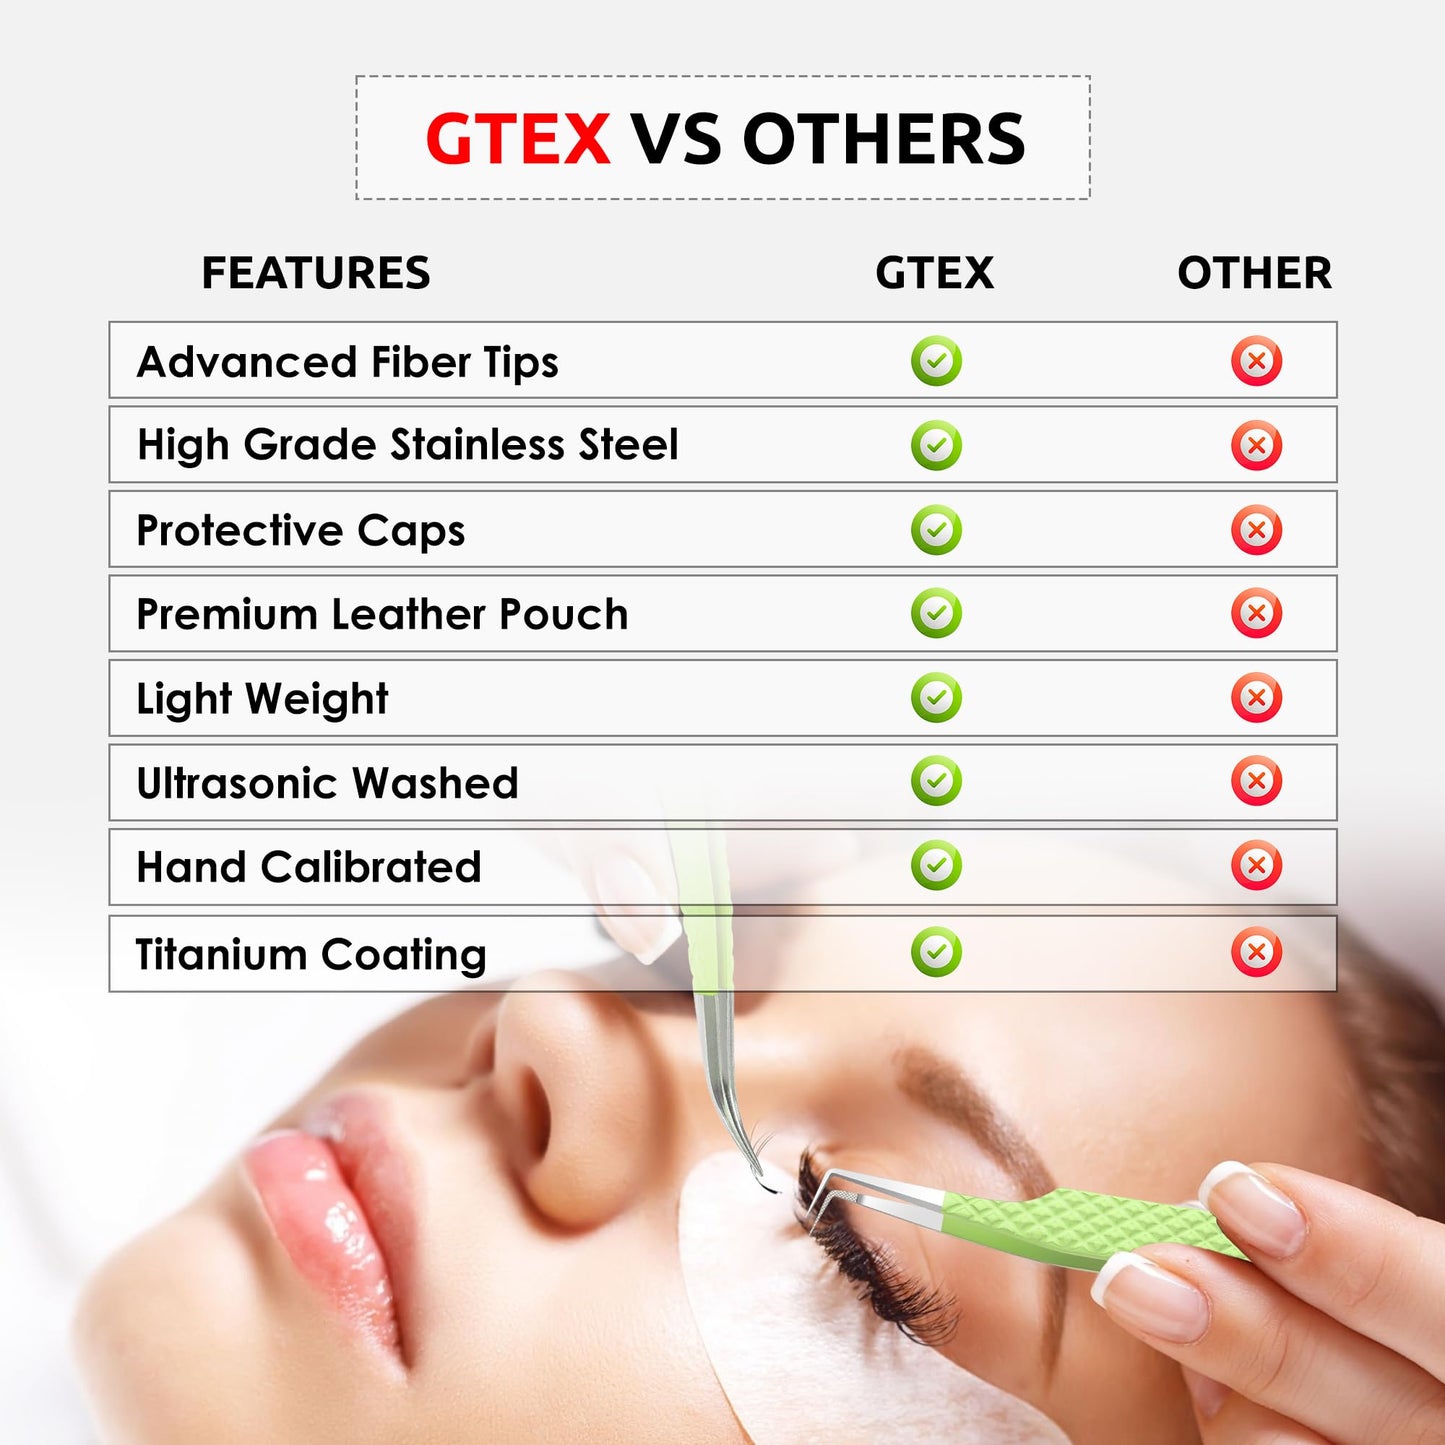 GTEX Fiber Tip Lash Tweezers For Eyelash Extension Tweezers Set of 5, Professional Eyelash Tweezers For Lash Extensions - 90 45 Degree Curved Volume Lash Tweezer Green